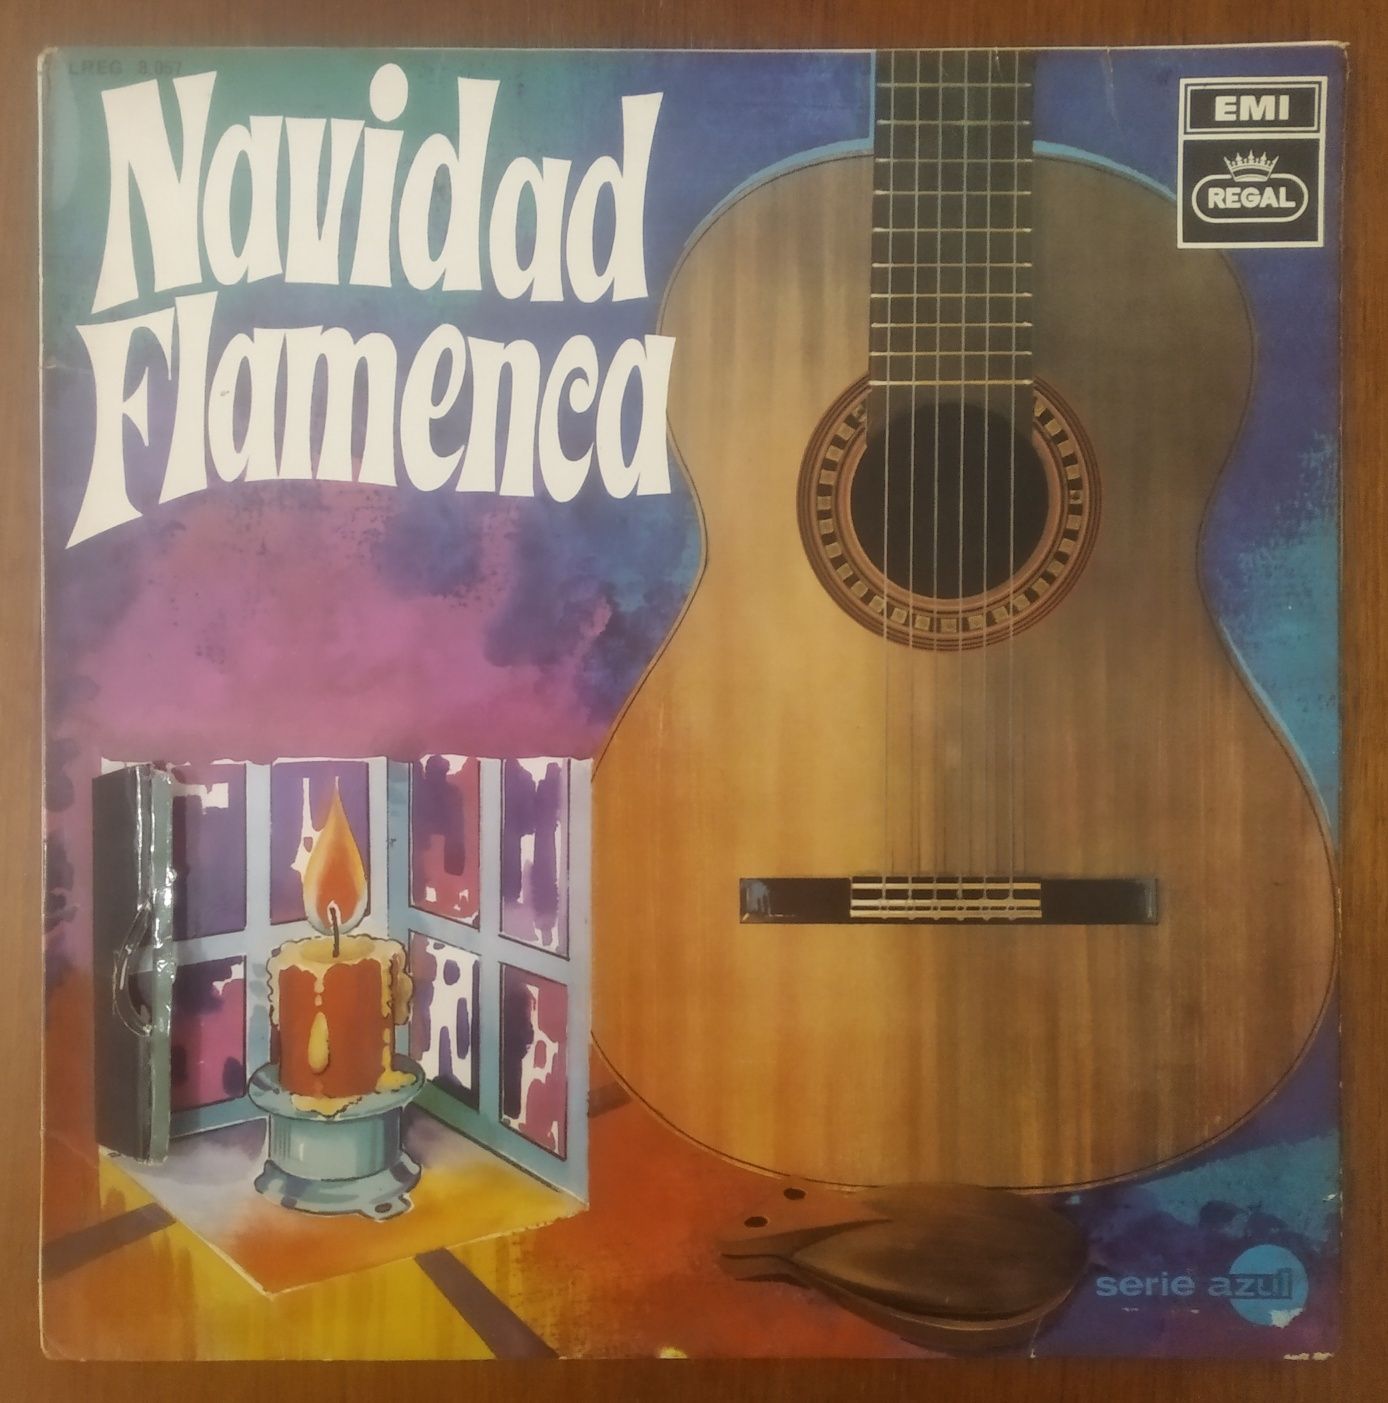 Navidad Flamenca disco de vinil